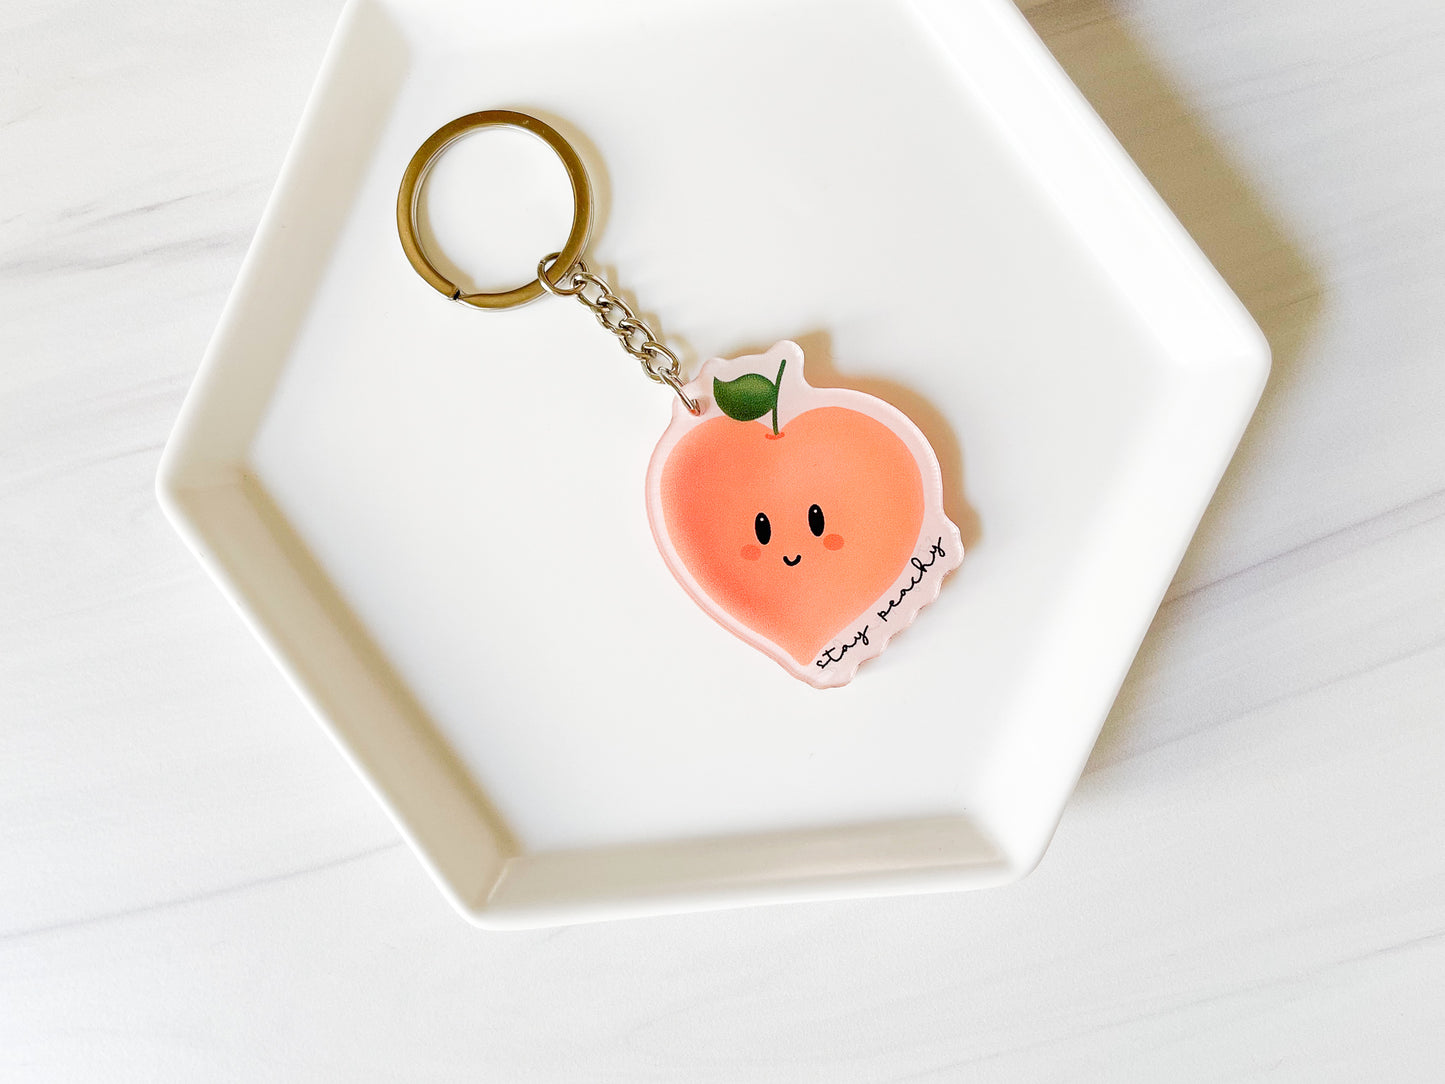 Stay Peachy Acrylic Keychain